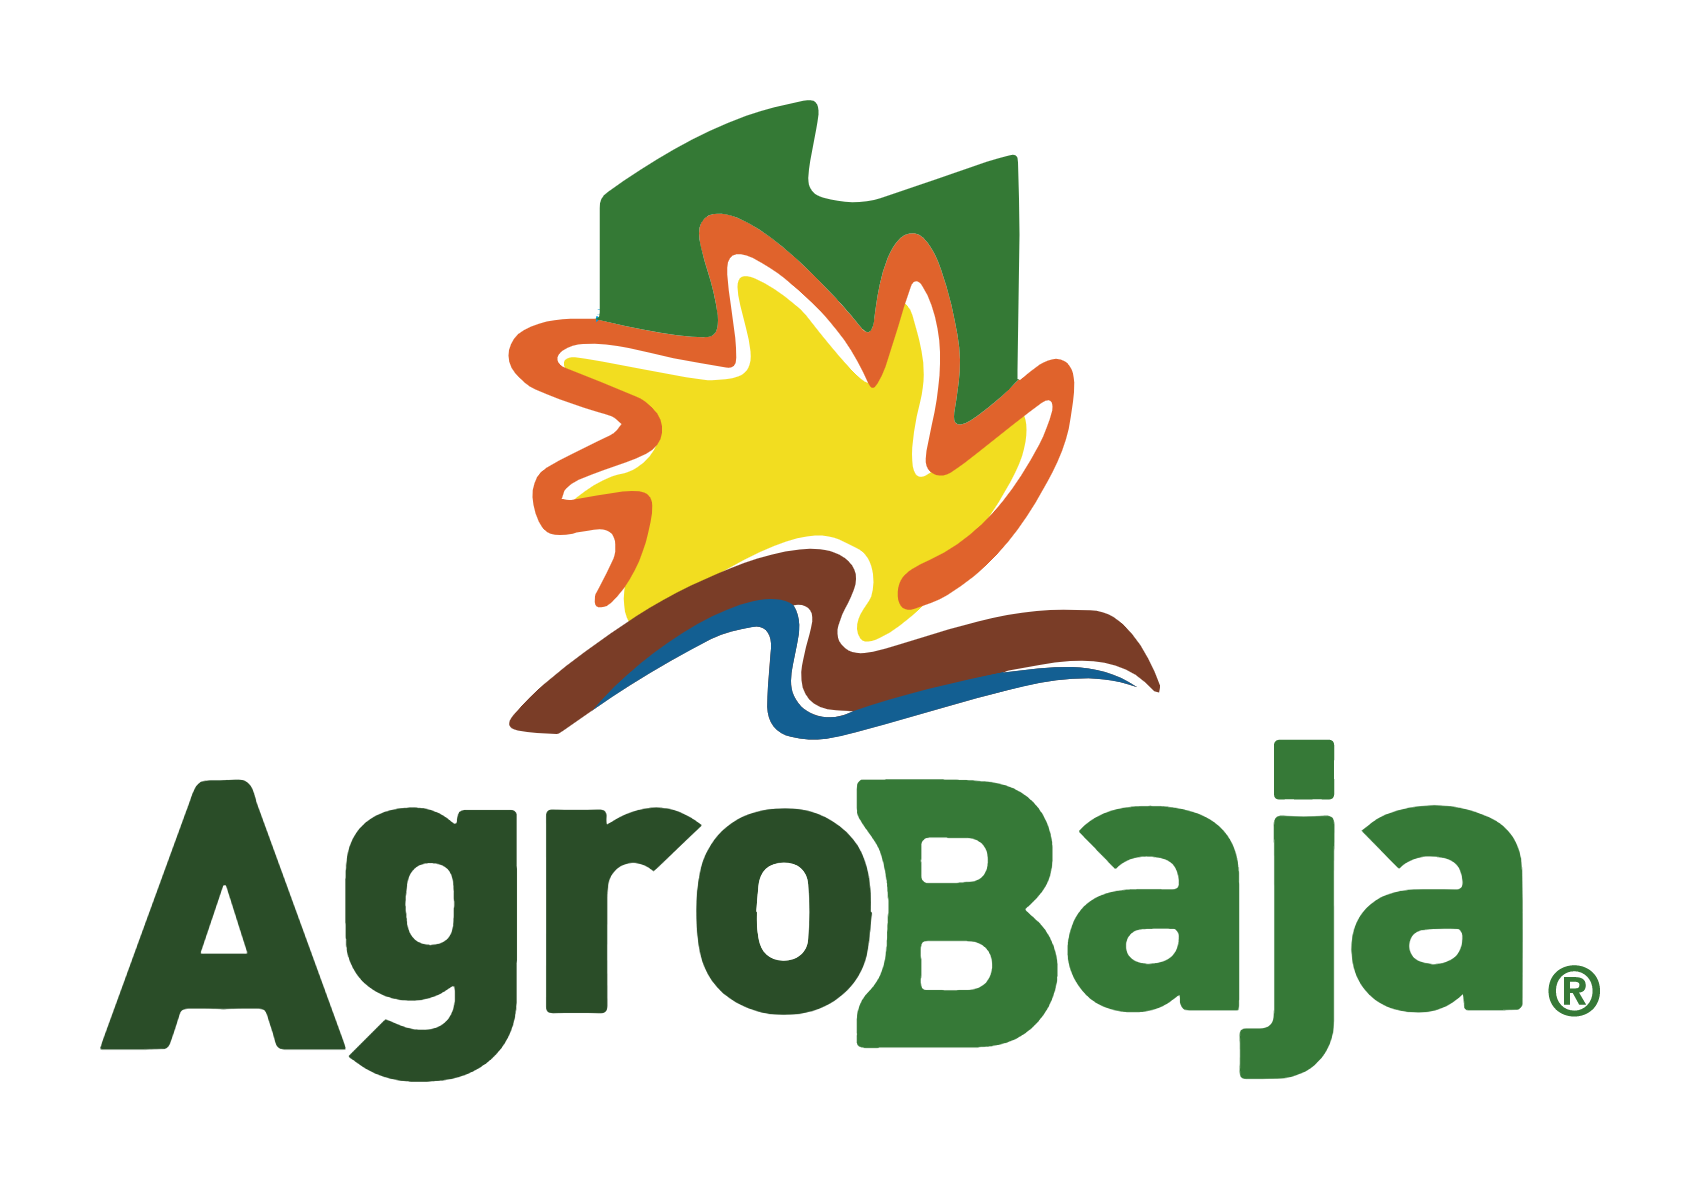 Download AgroBaja Logo PNG and Vector (PDF, SVG, Ai, EPS) Free